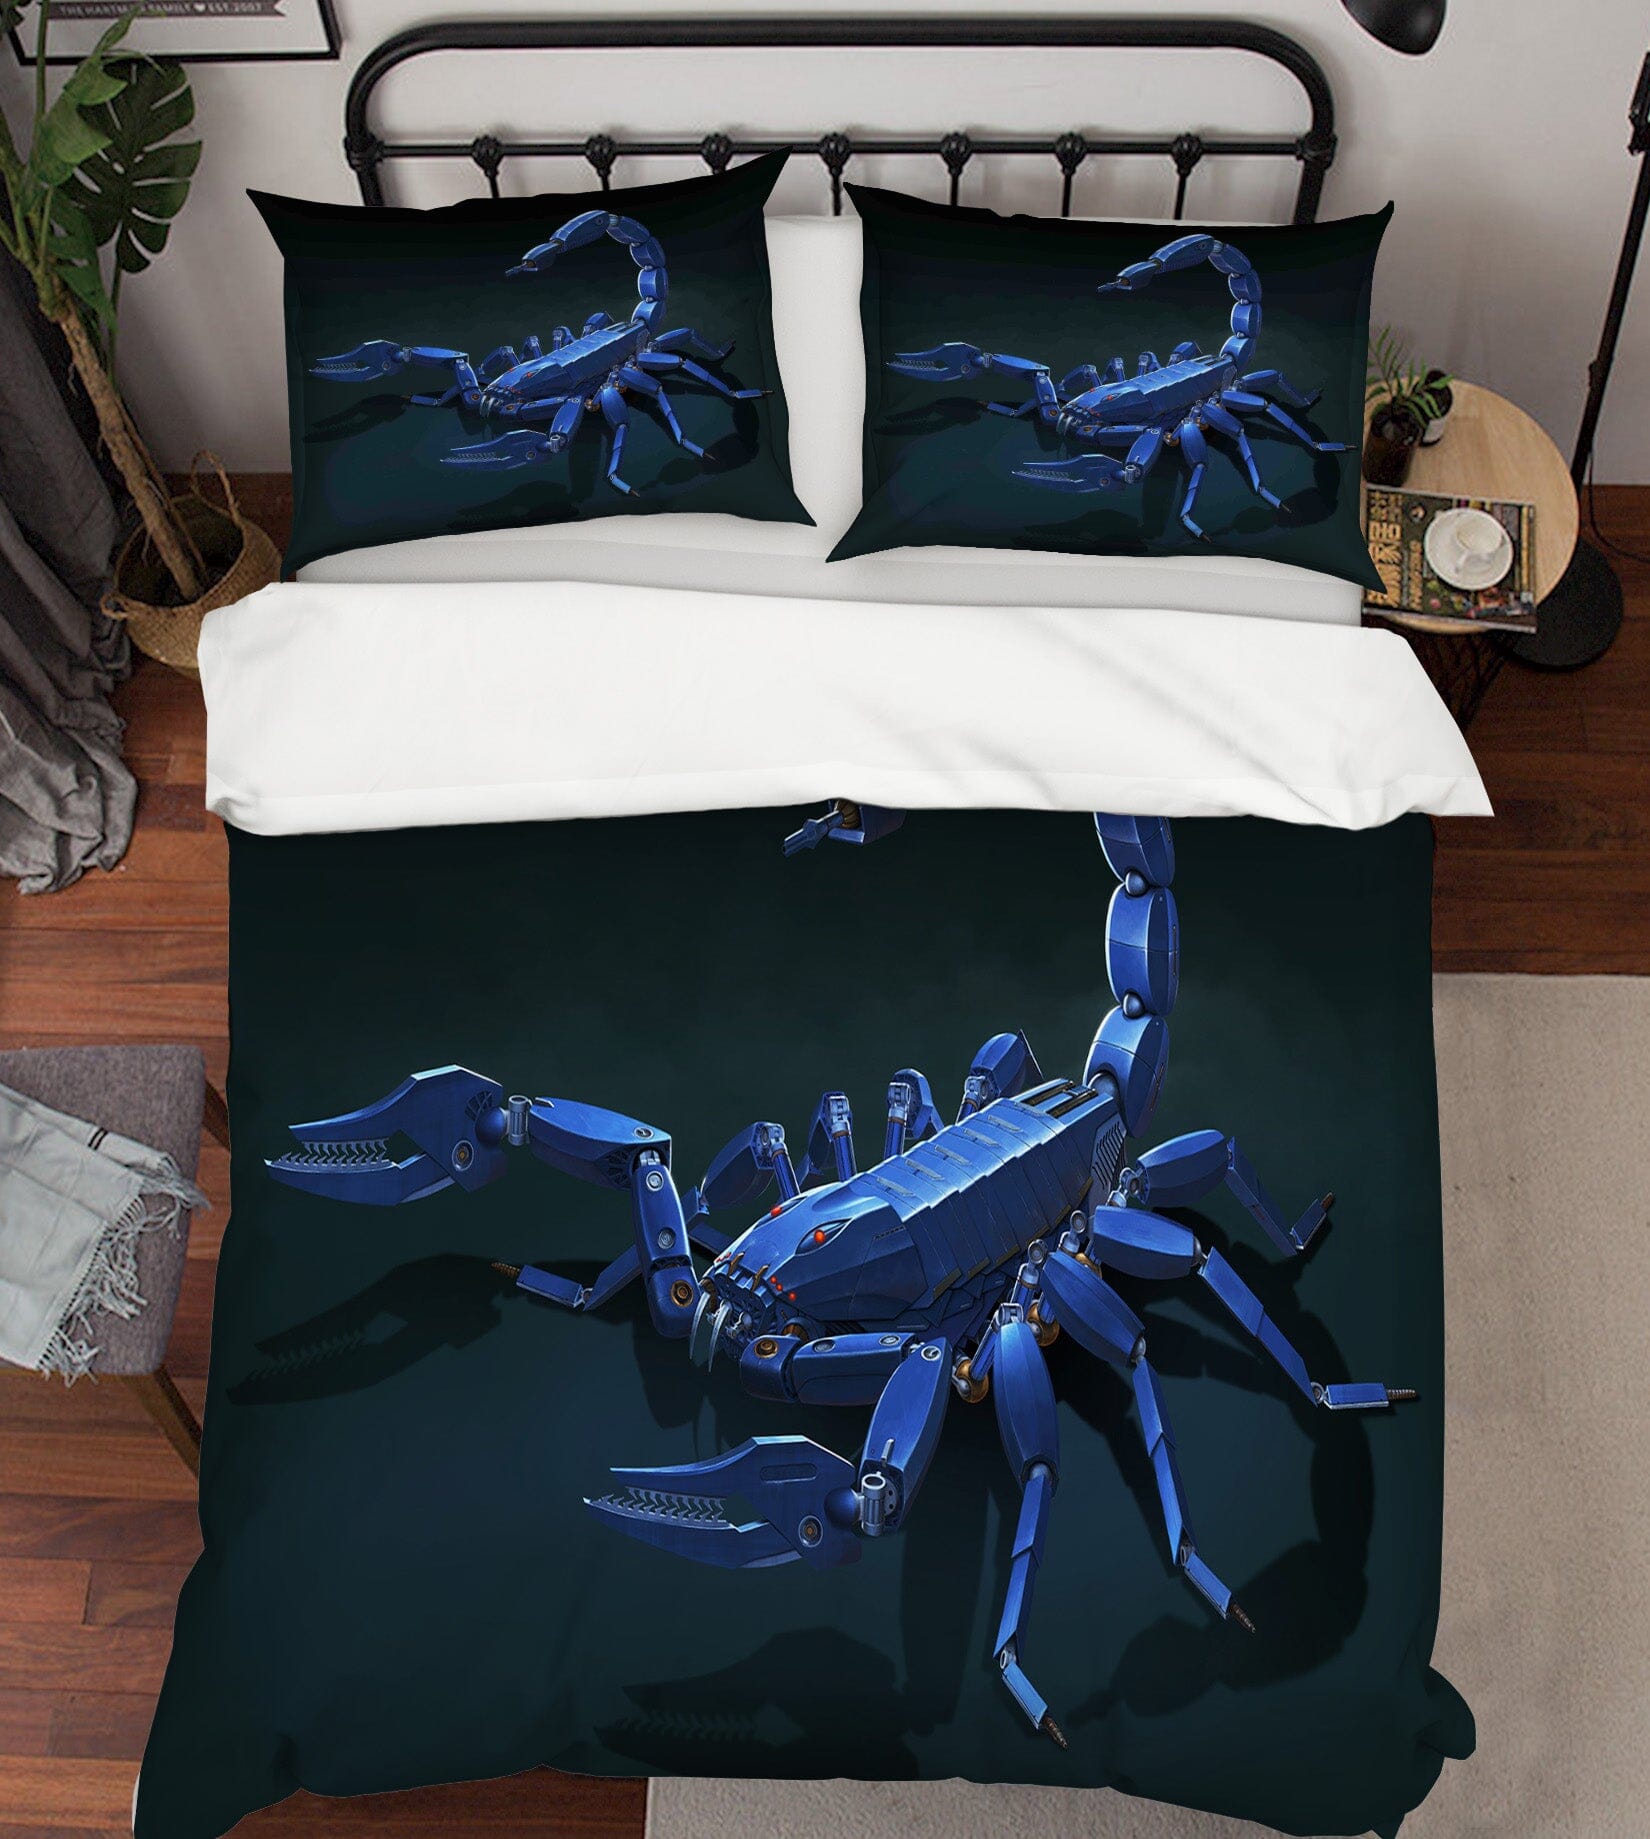 3D Metal Scorpion 061 Bed Pillowcases Quilt Exclusive Designer Vincent Quiet Covers AJ Creativity Home 